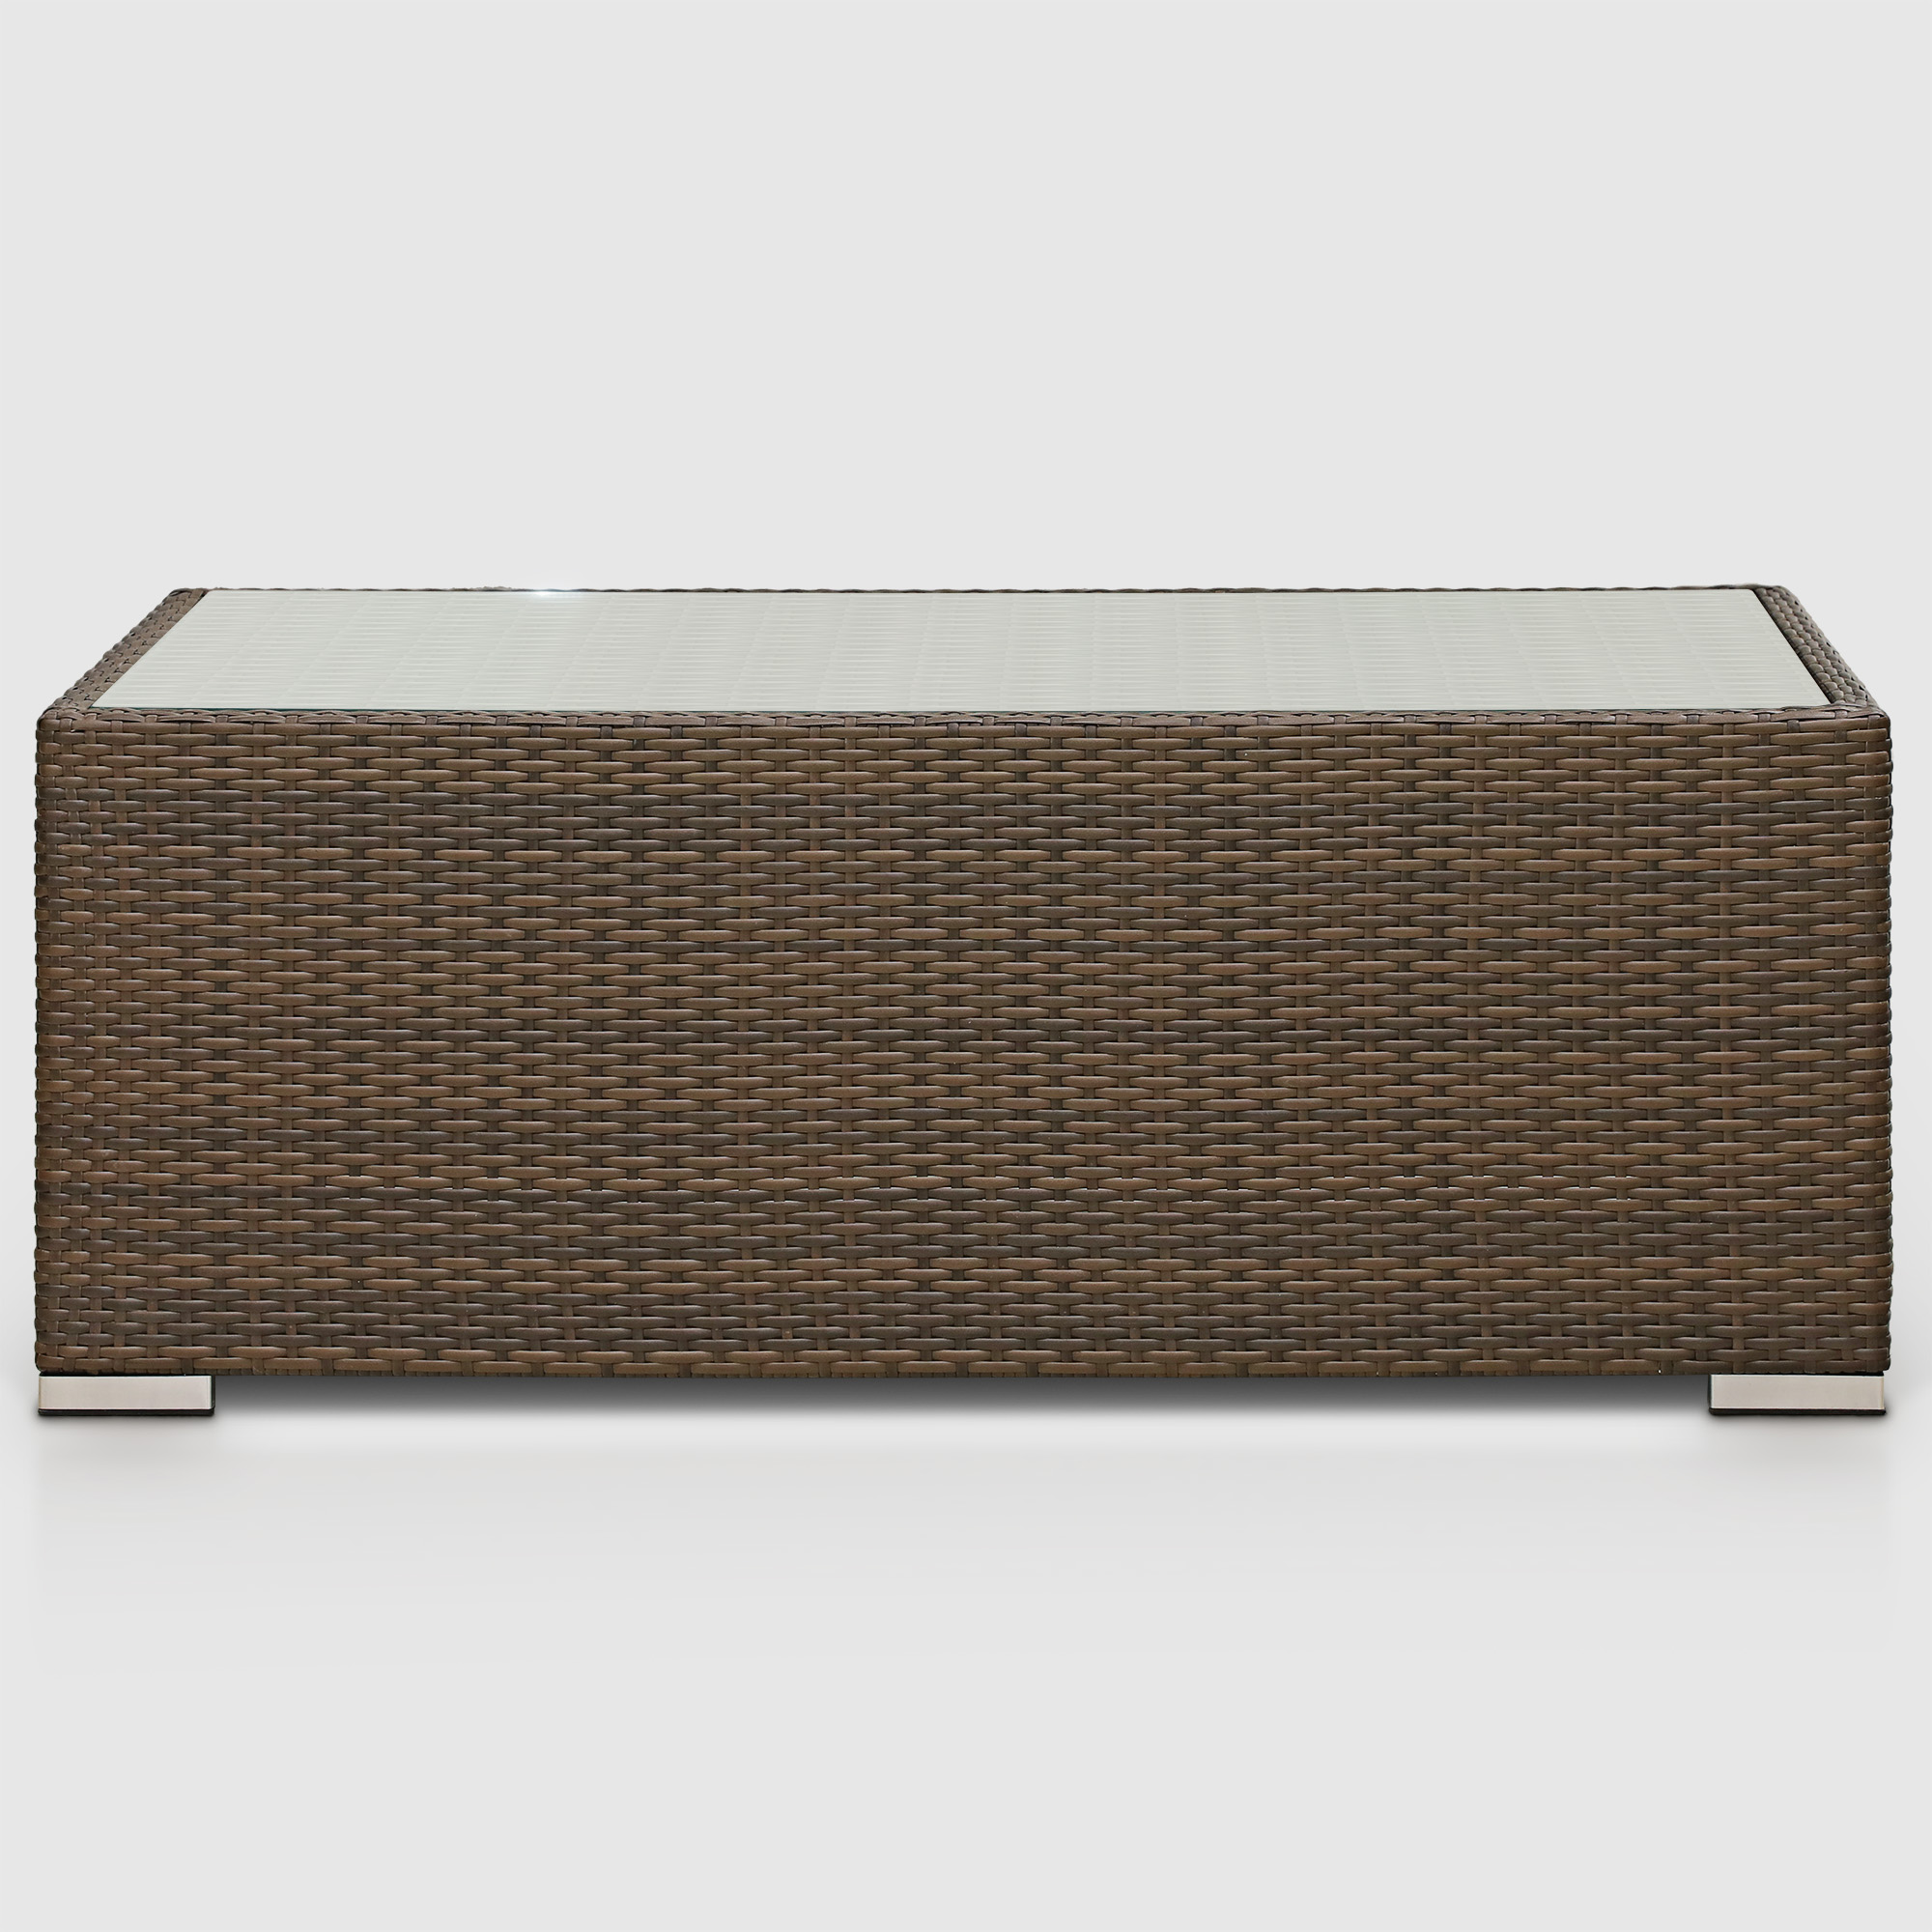 Комплект мебели Ns Rattan Cleo коричневый с бежевым 7 предметов, цвет бежевый, размер 224х88х70 - фото 11